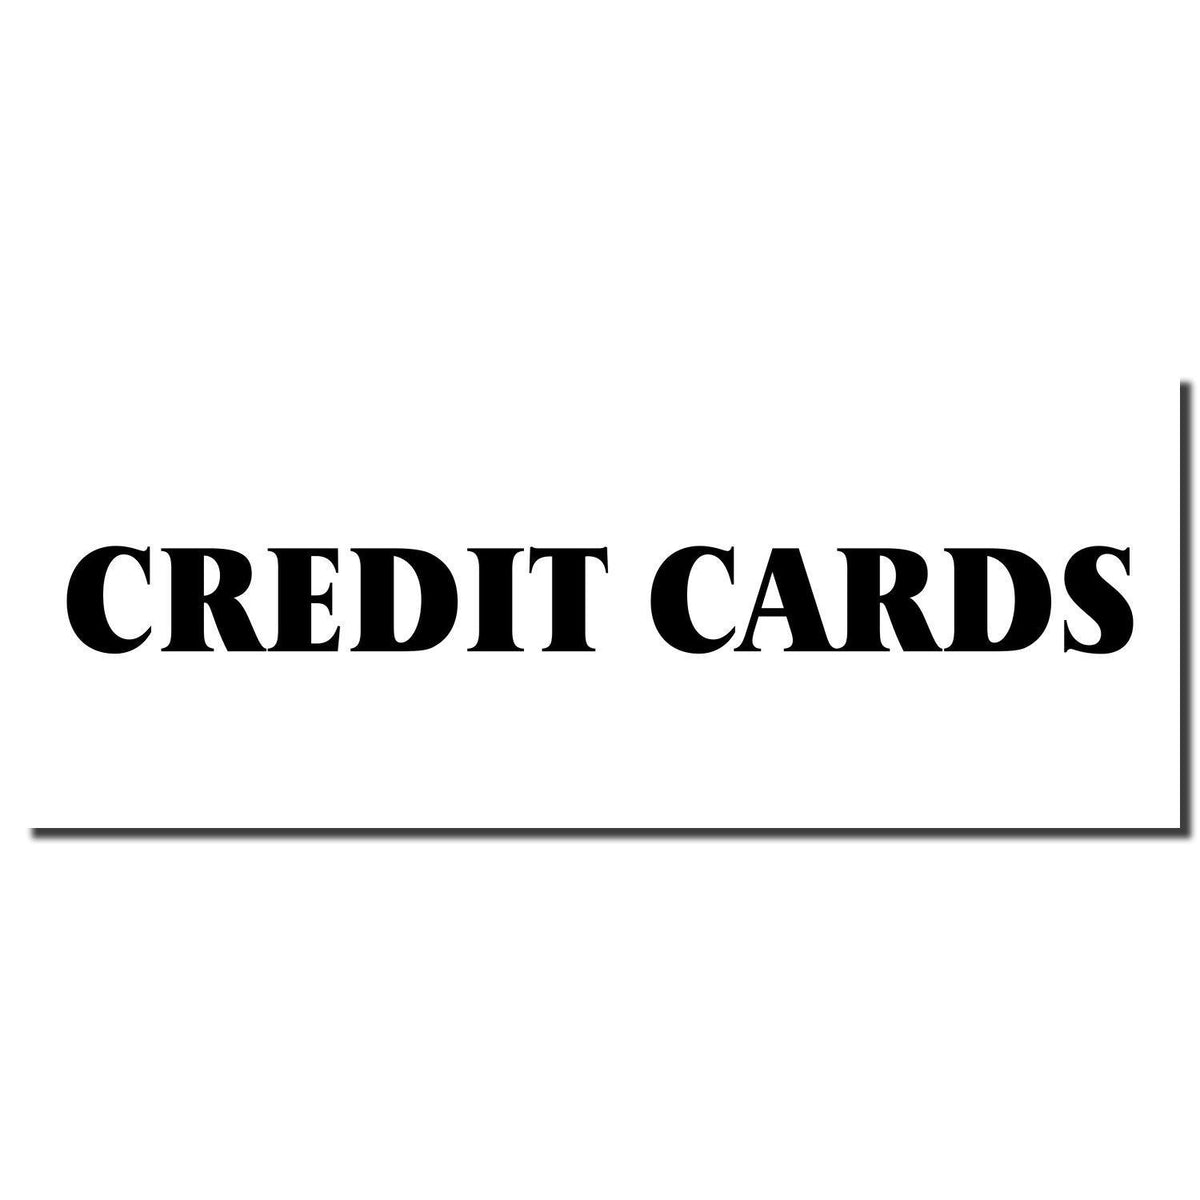 Enlarged Imprint Slim Pre Inked Credit Cards Stamp Sample